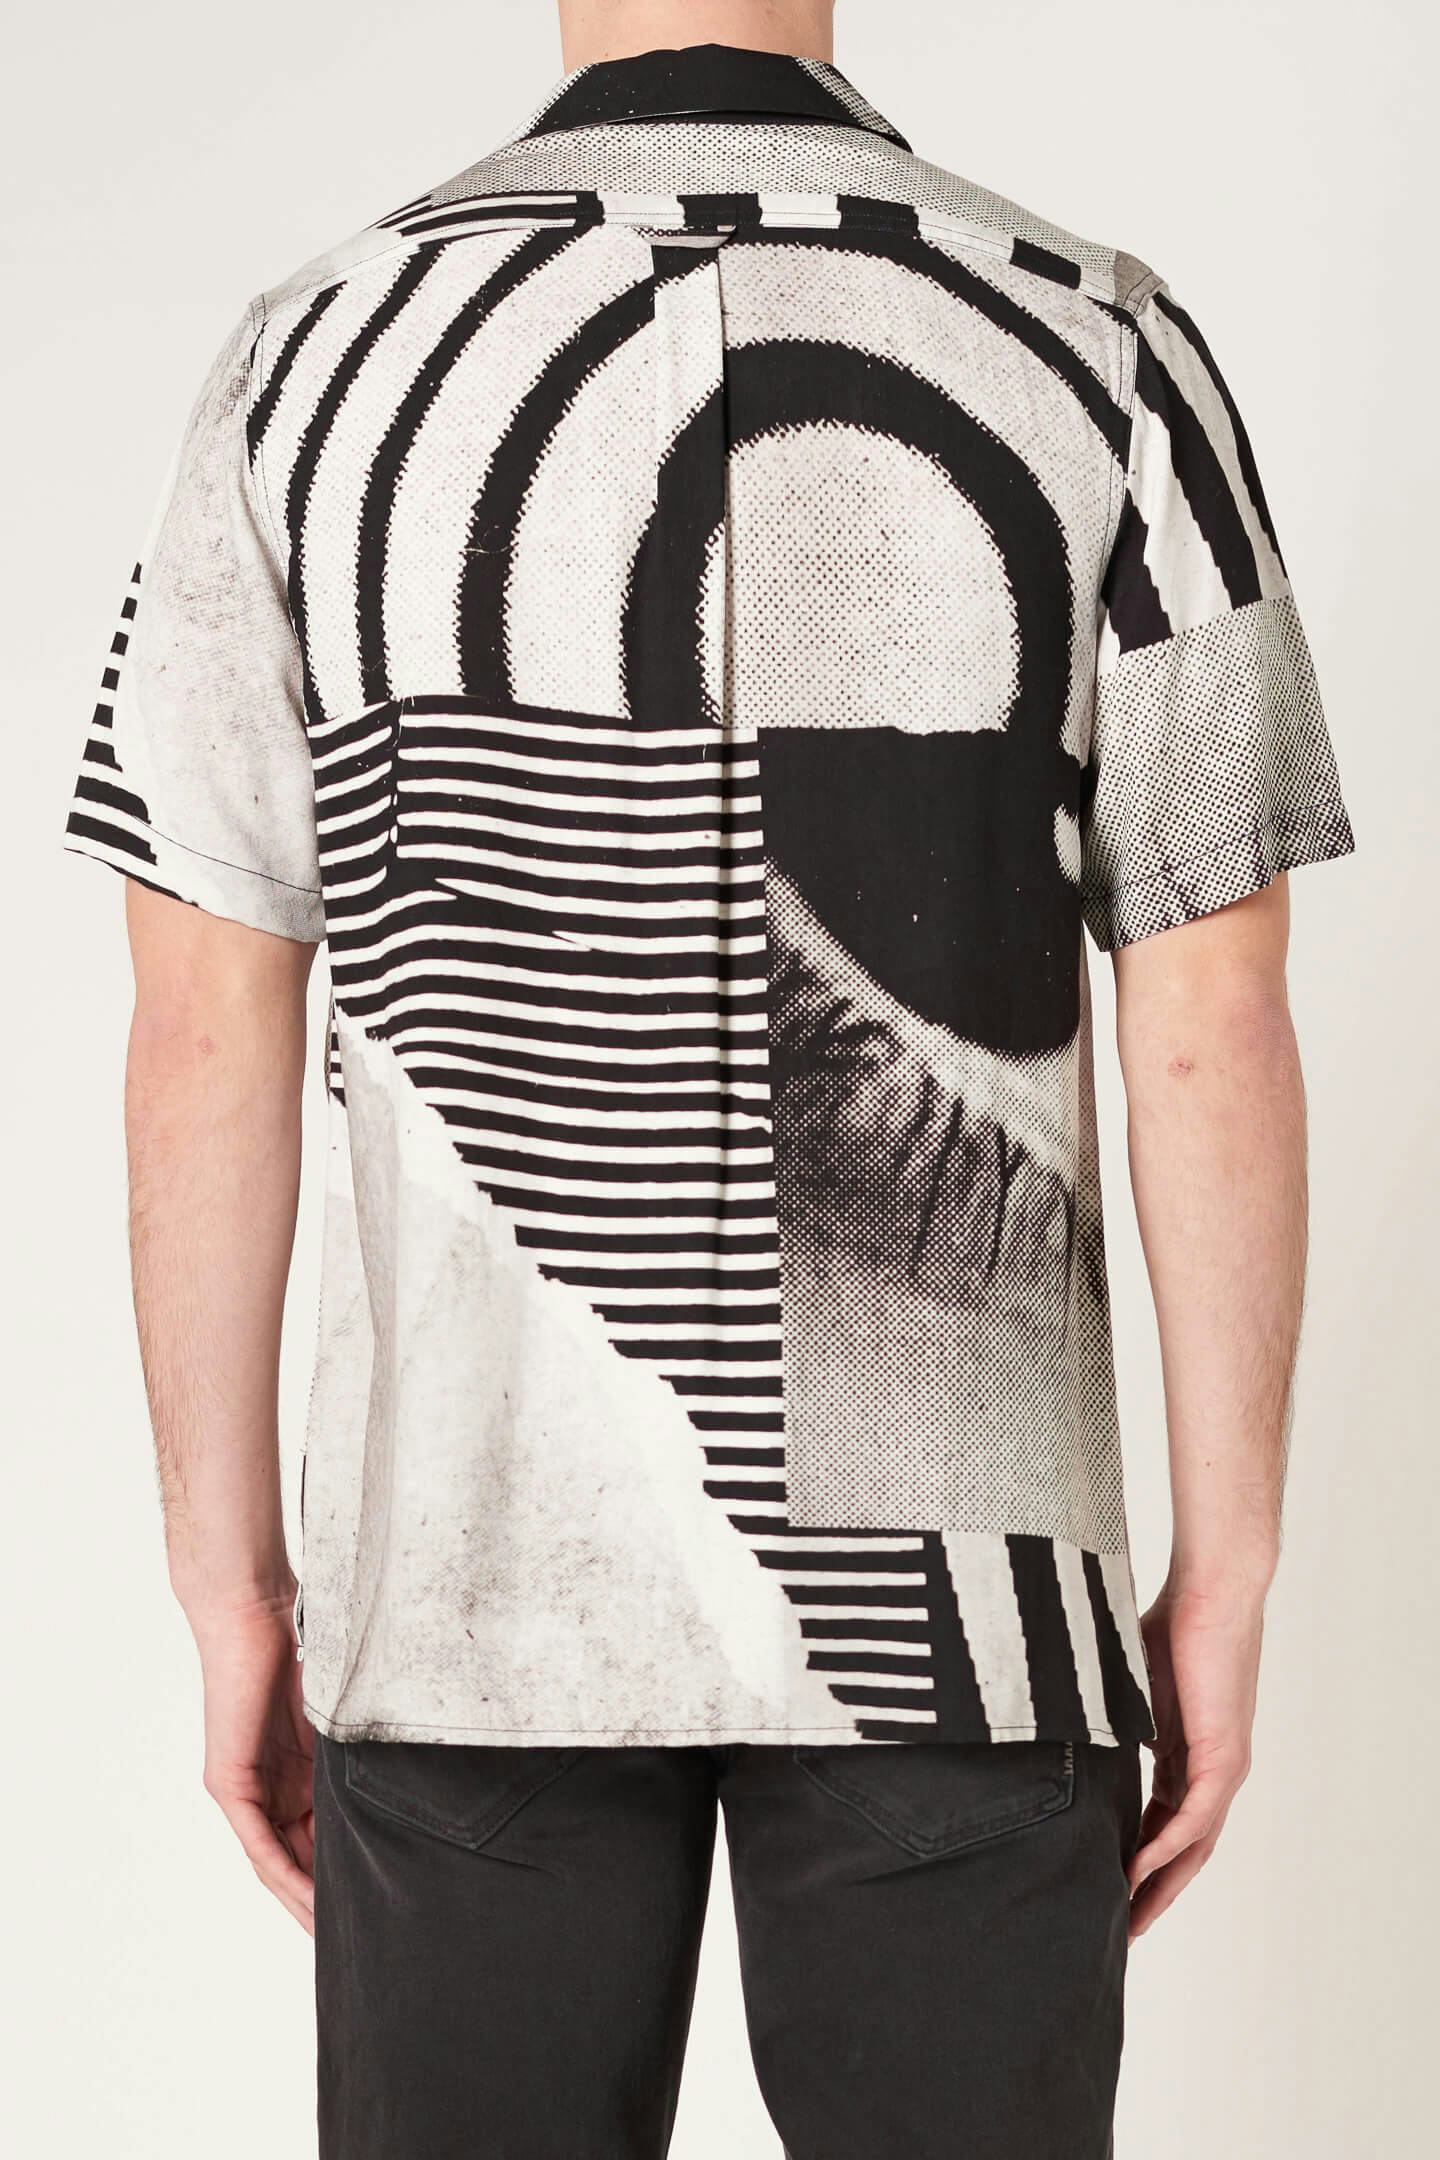 Turrell Art Shirt 6 - Black Neuw straight silver mens-shirt 